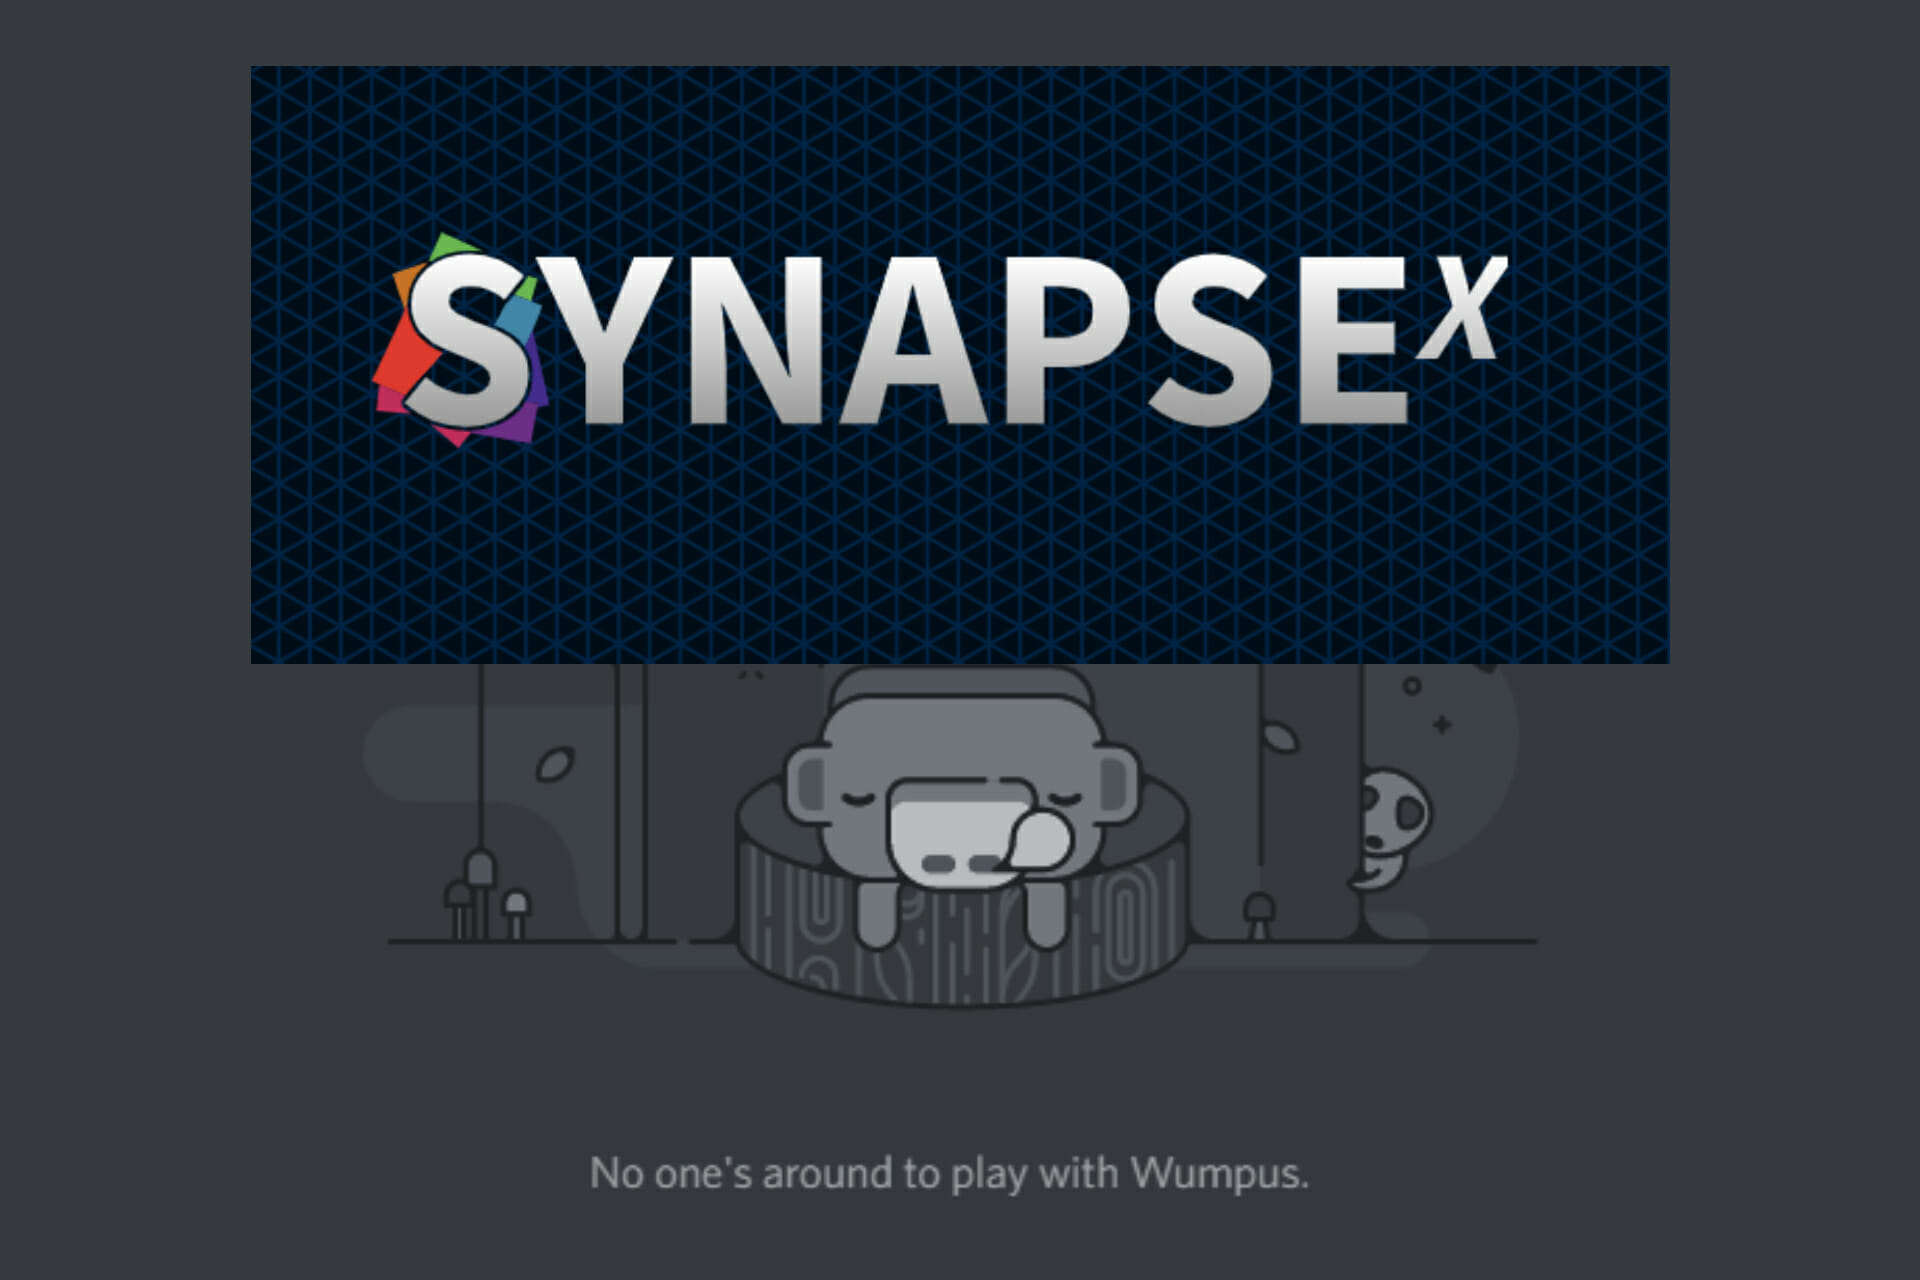 TEST THE SYNAPSE X V3 DEVELOPER PREVIEW! JOIN THE INVITATION PROGRAM NOW! –